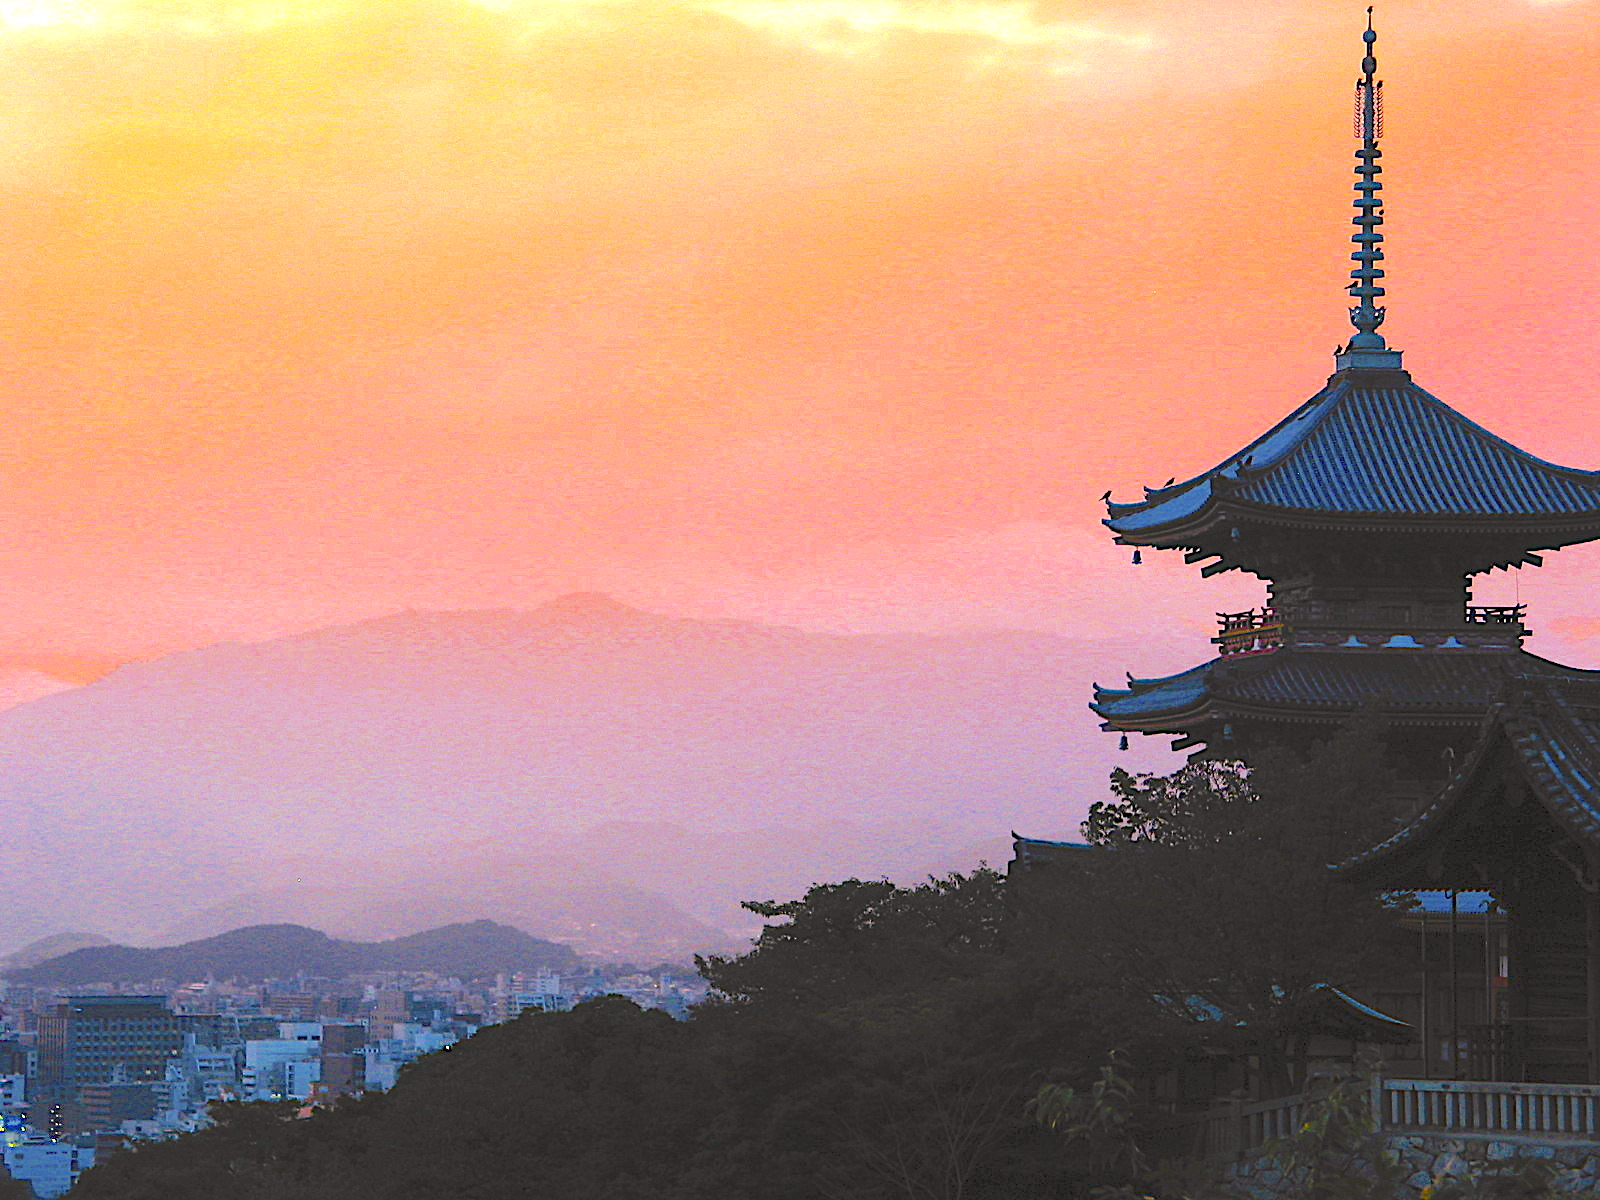 Evening calm at Buddhist temple Kiyomizu-dera in Kyoto